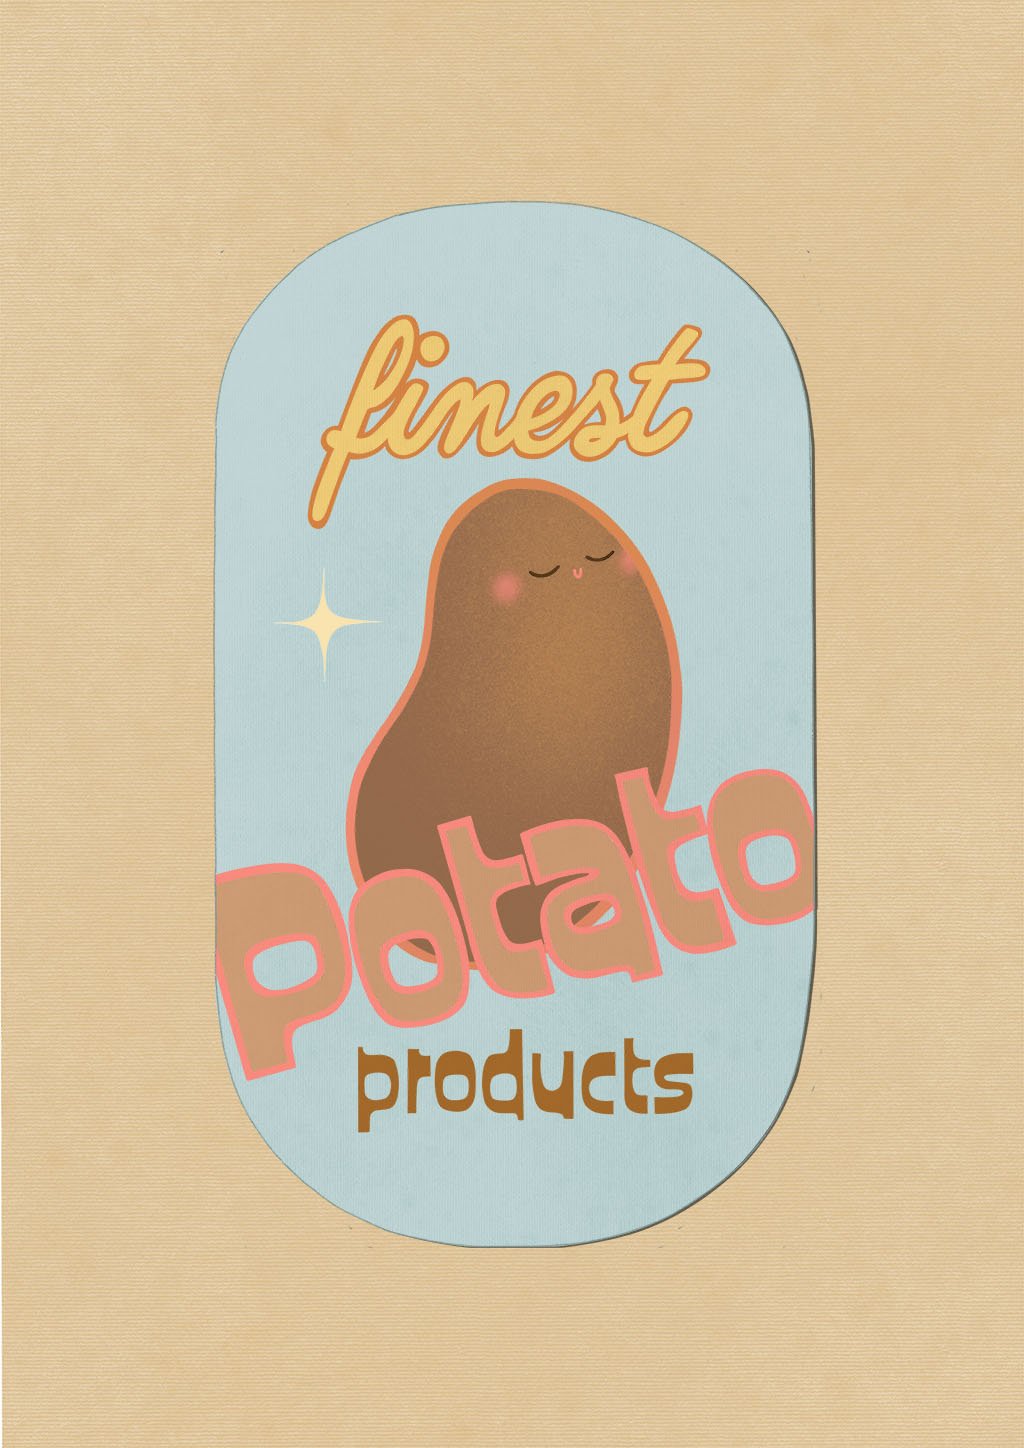 x453 Potato Products 